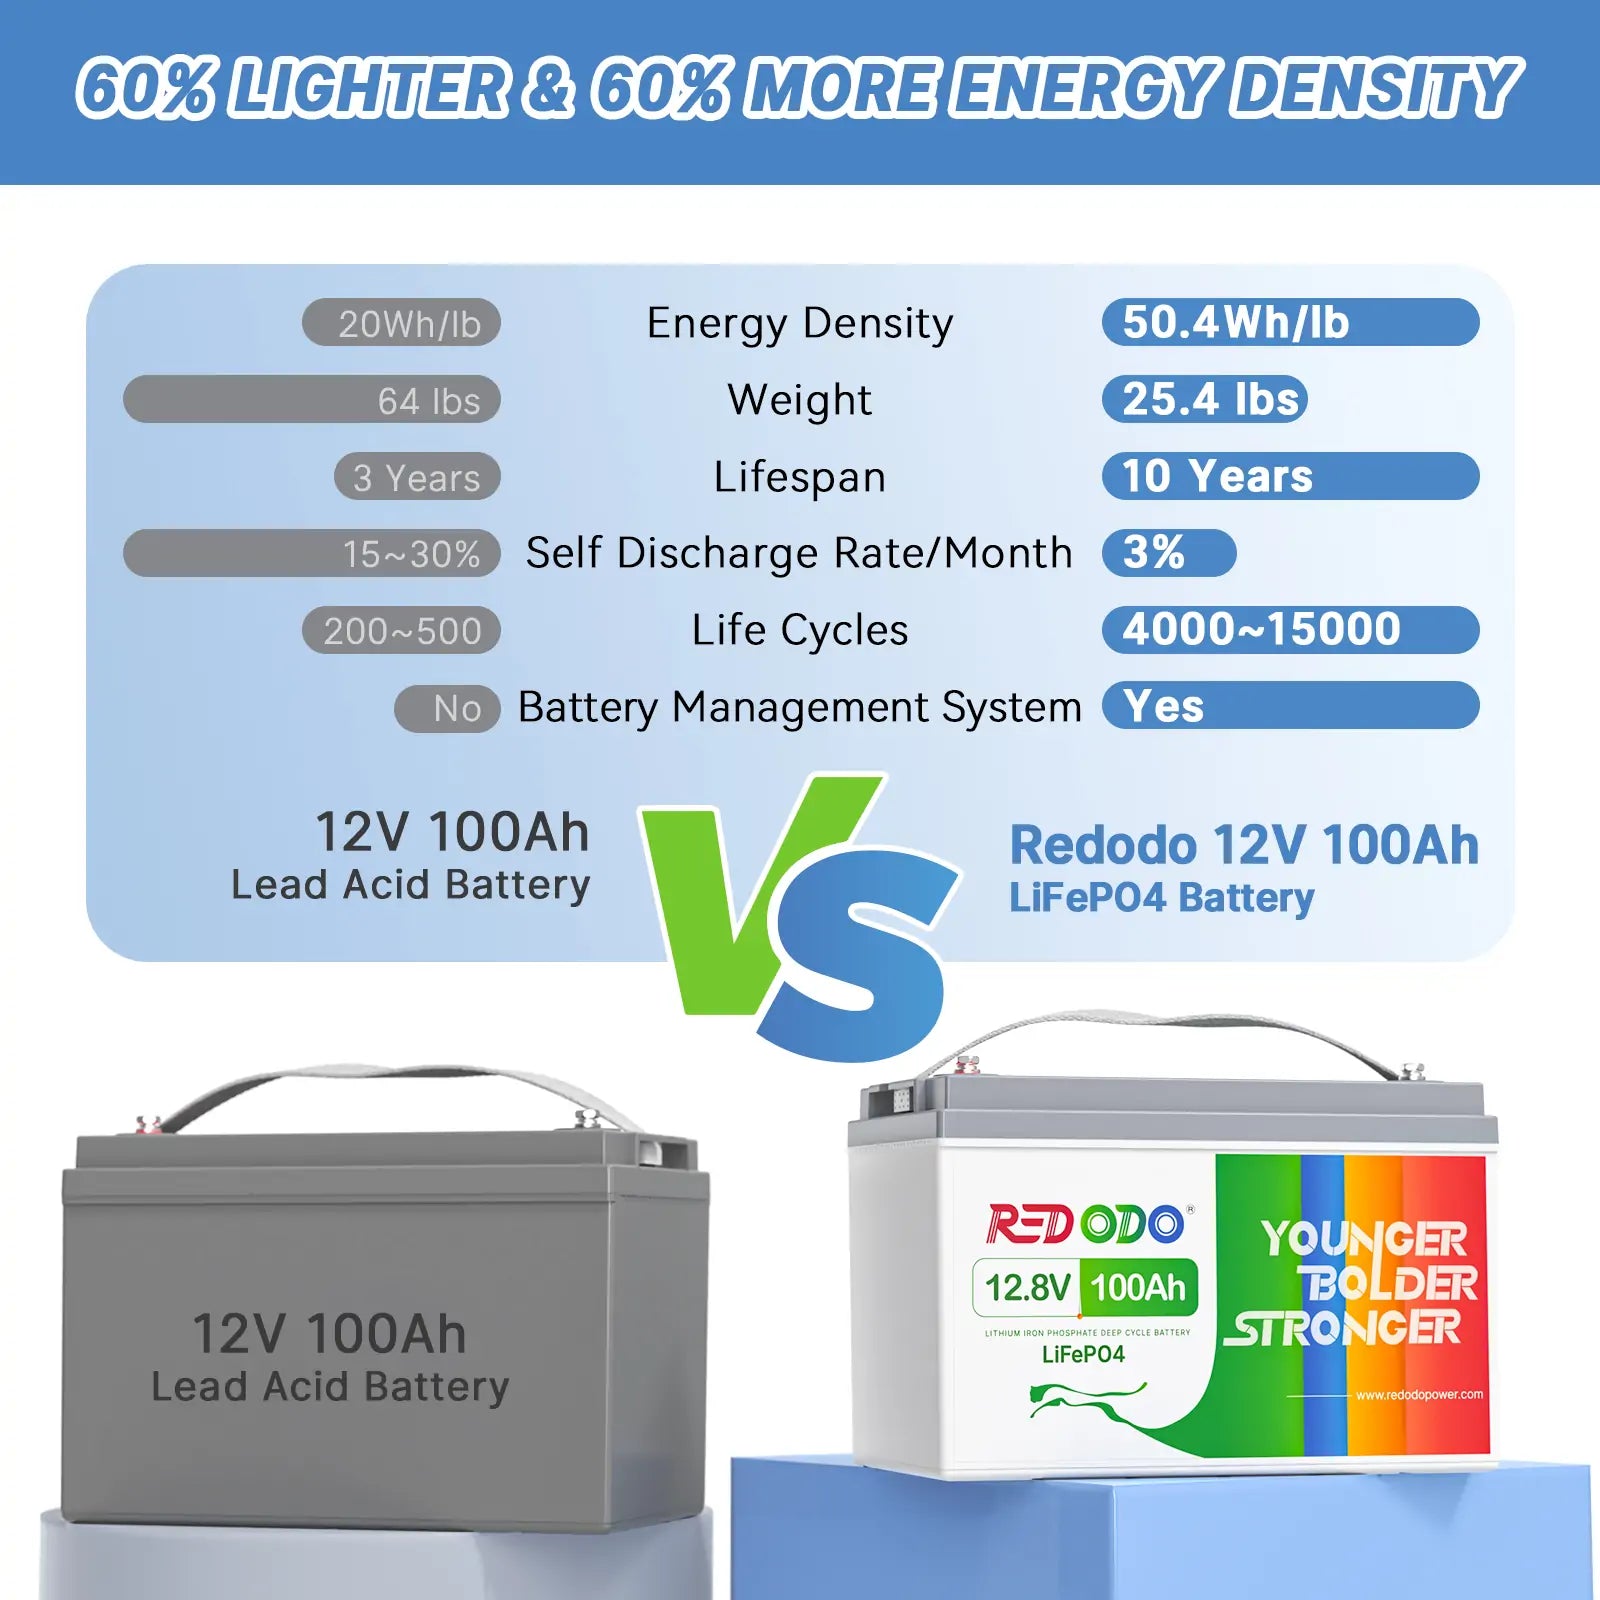 Redodo 12V 100Ah LiFePO4 battery | 1.28kWh & 1.28kW Redodo